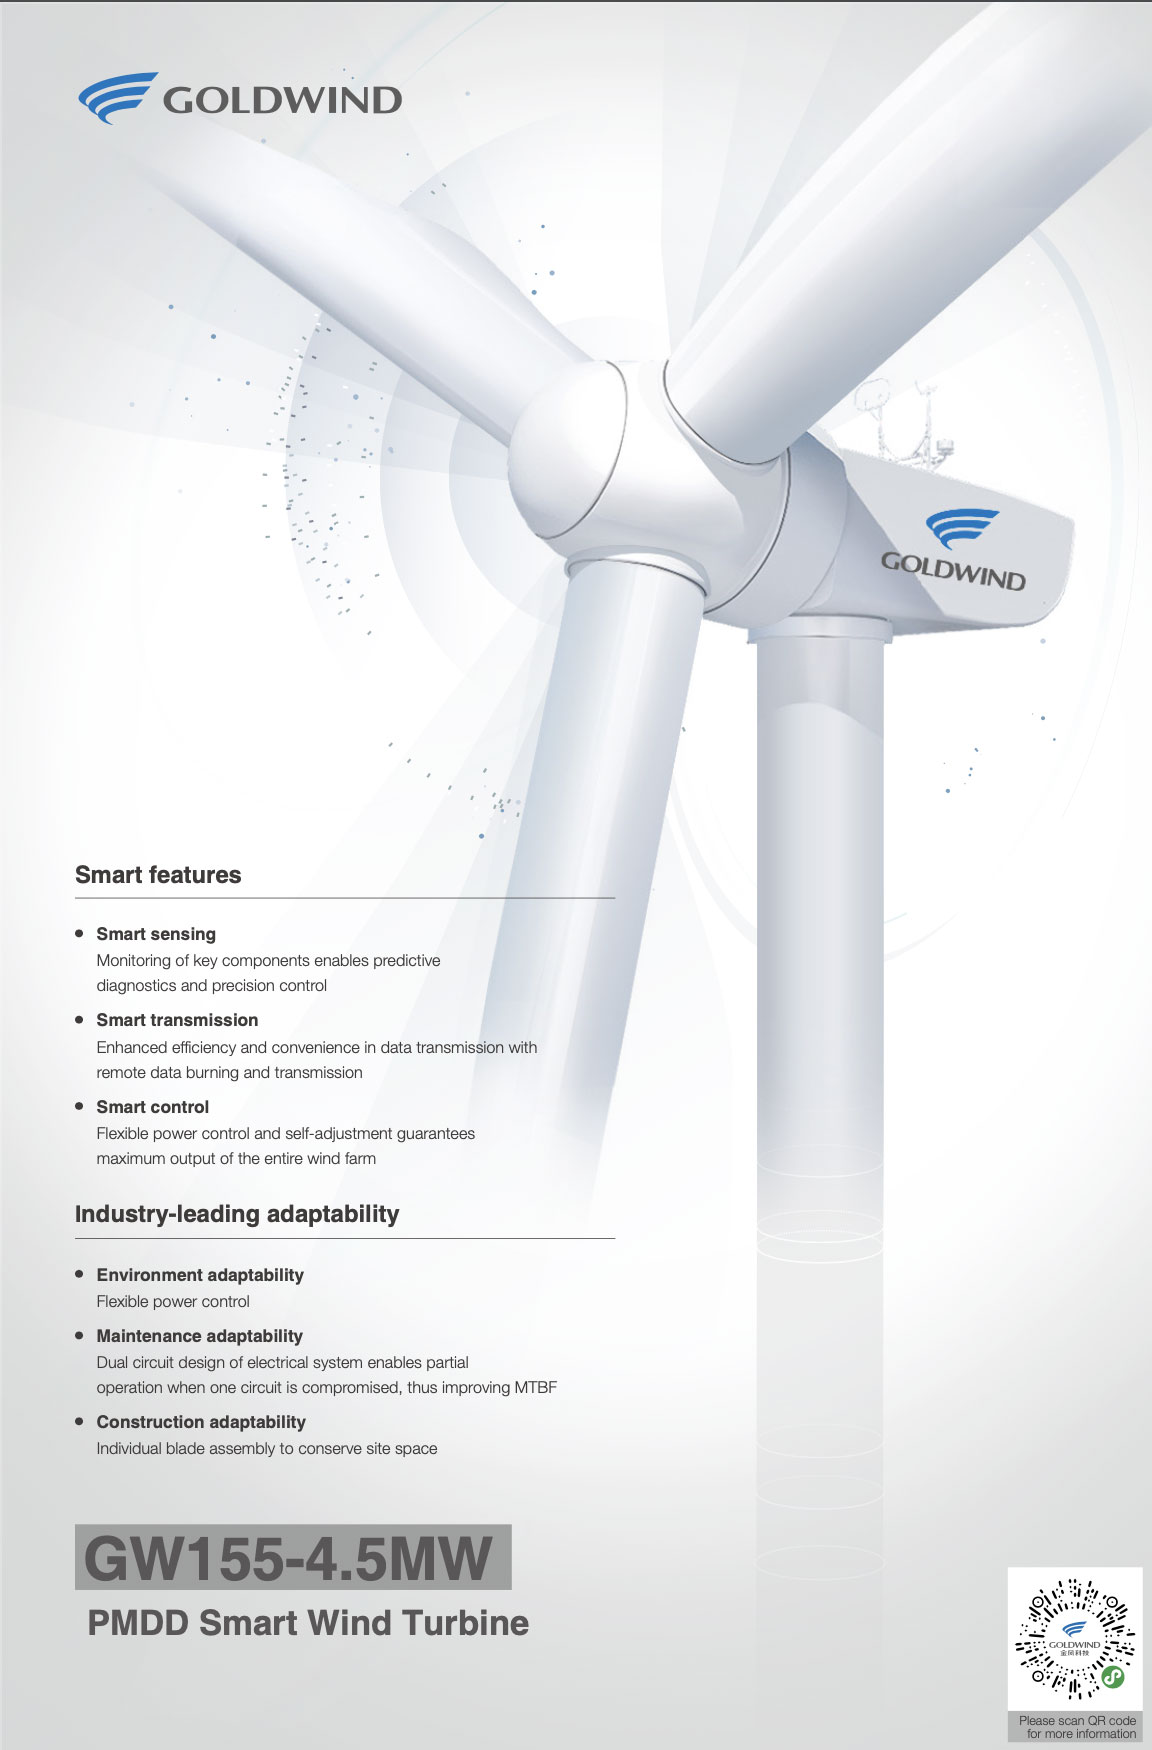 GW 155/4.5S MW Turbine Brochure